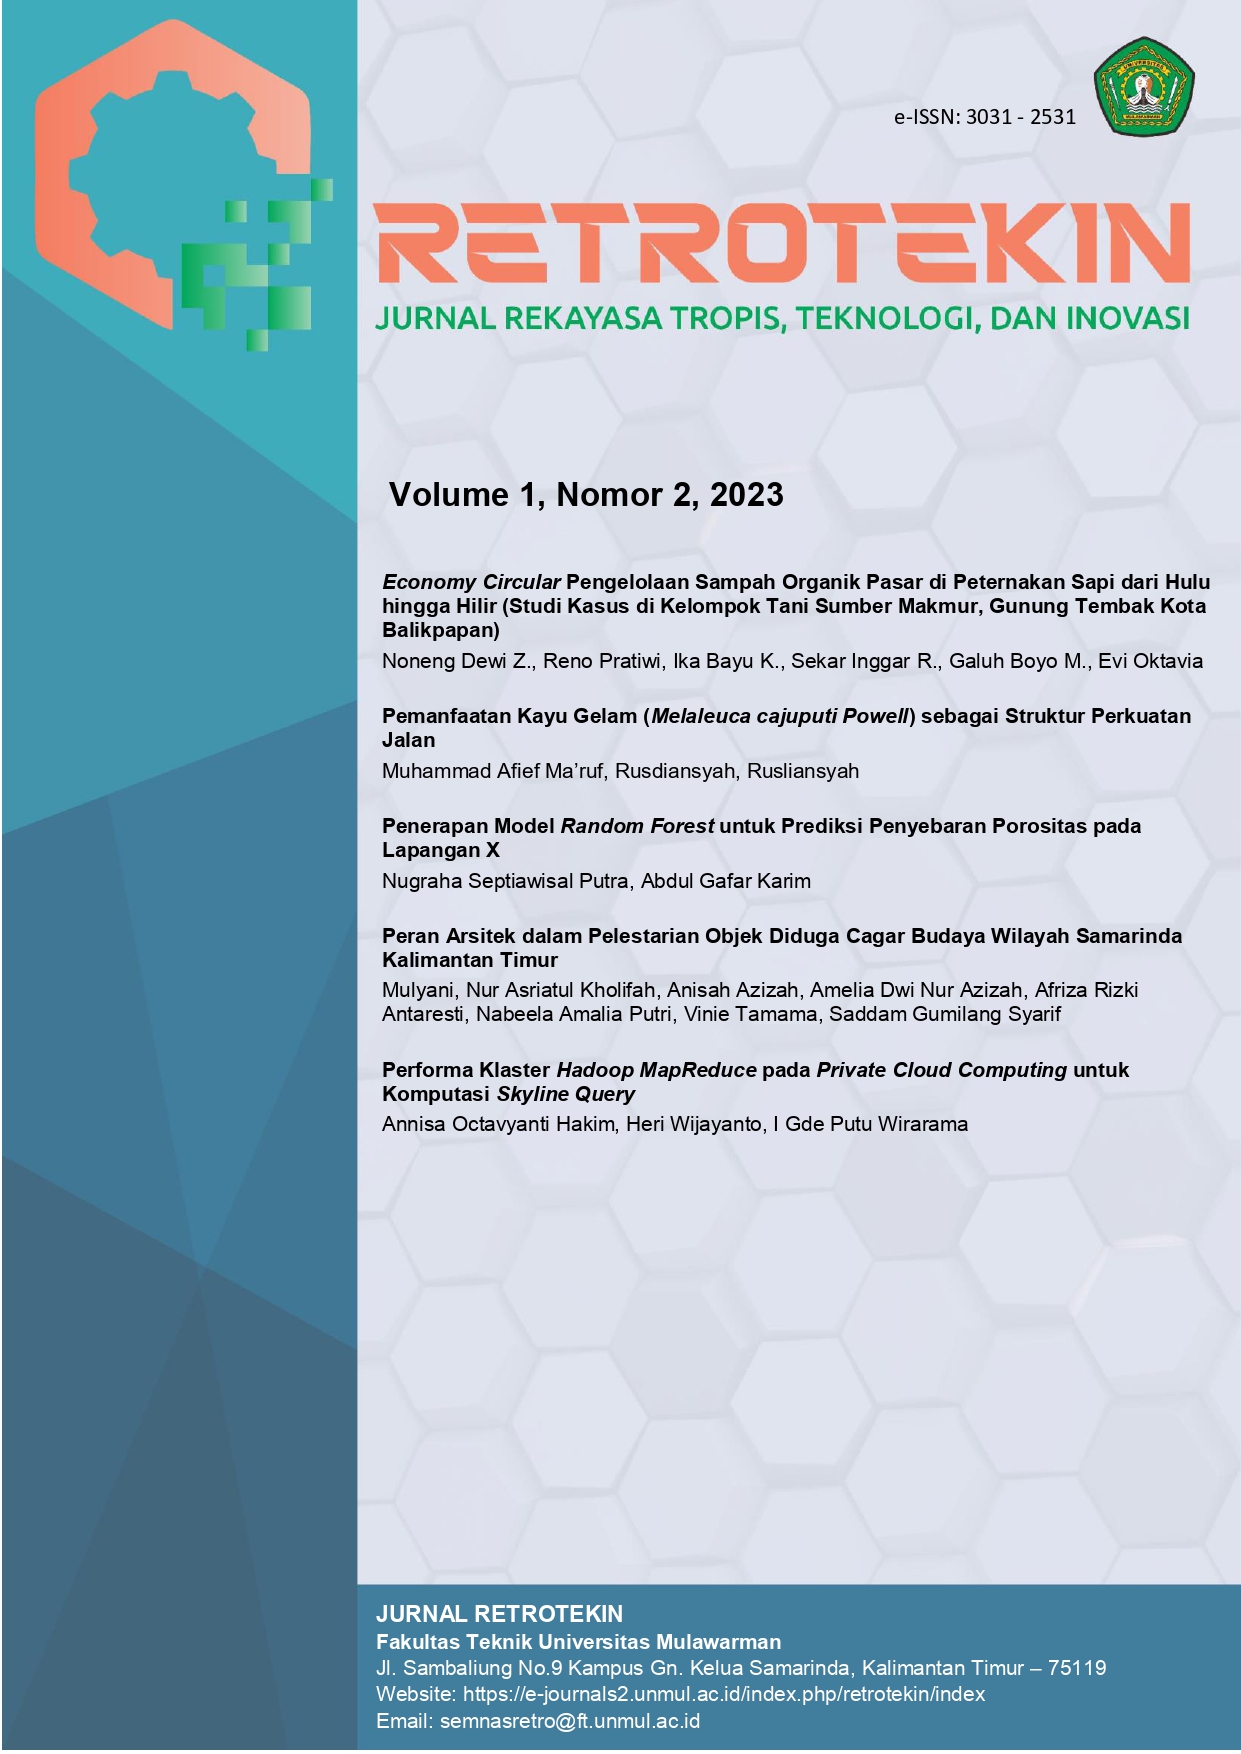 					View Vol. 1 No. 2 (2023): RETROTEKIN (Rekayasa Tropis, Teknologi, dan Inovasi)
				